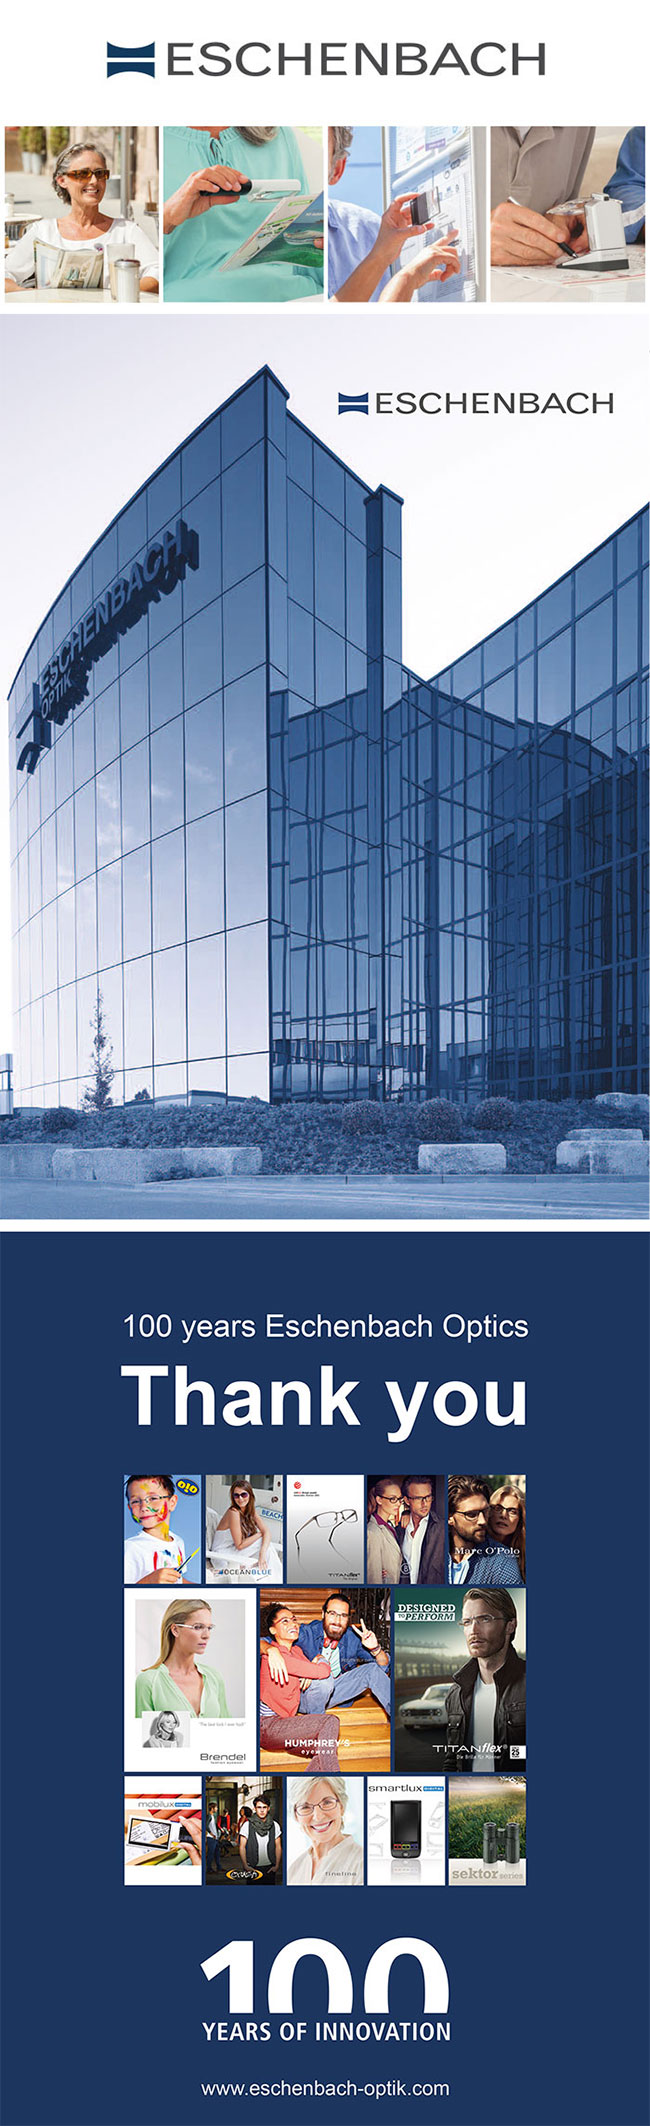 【Eschenbach】4x/16D 德國製LED手持型非球面放大鏡15114